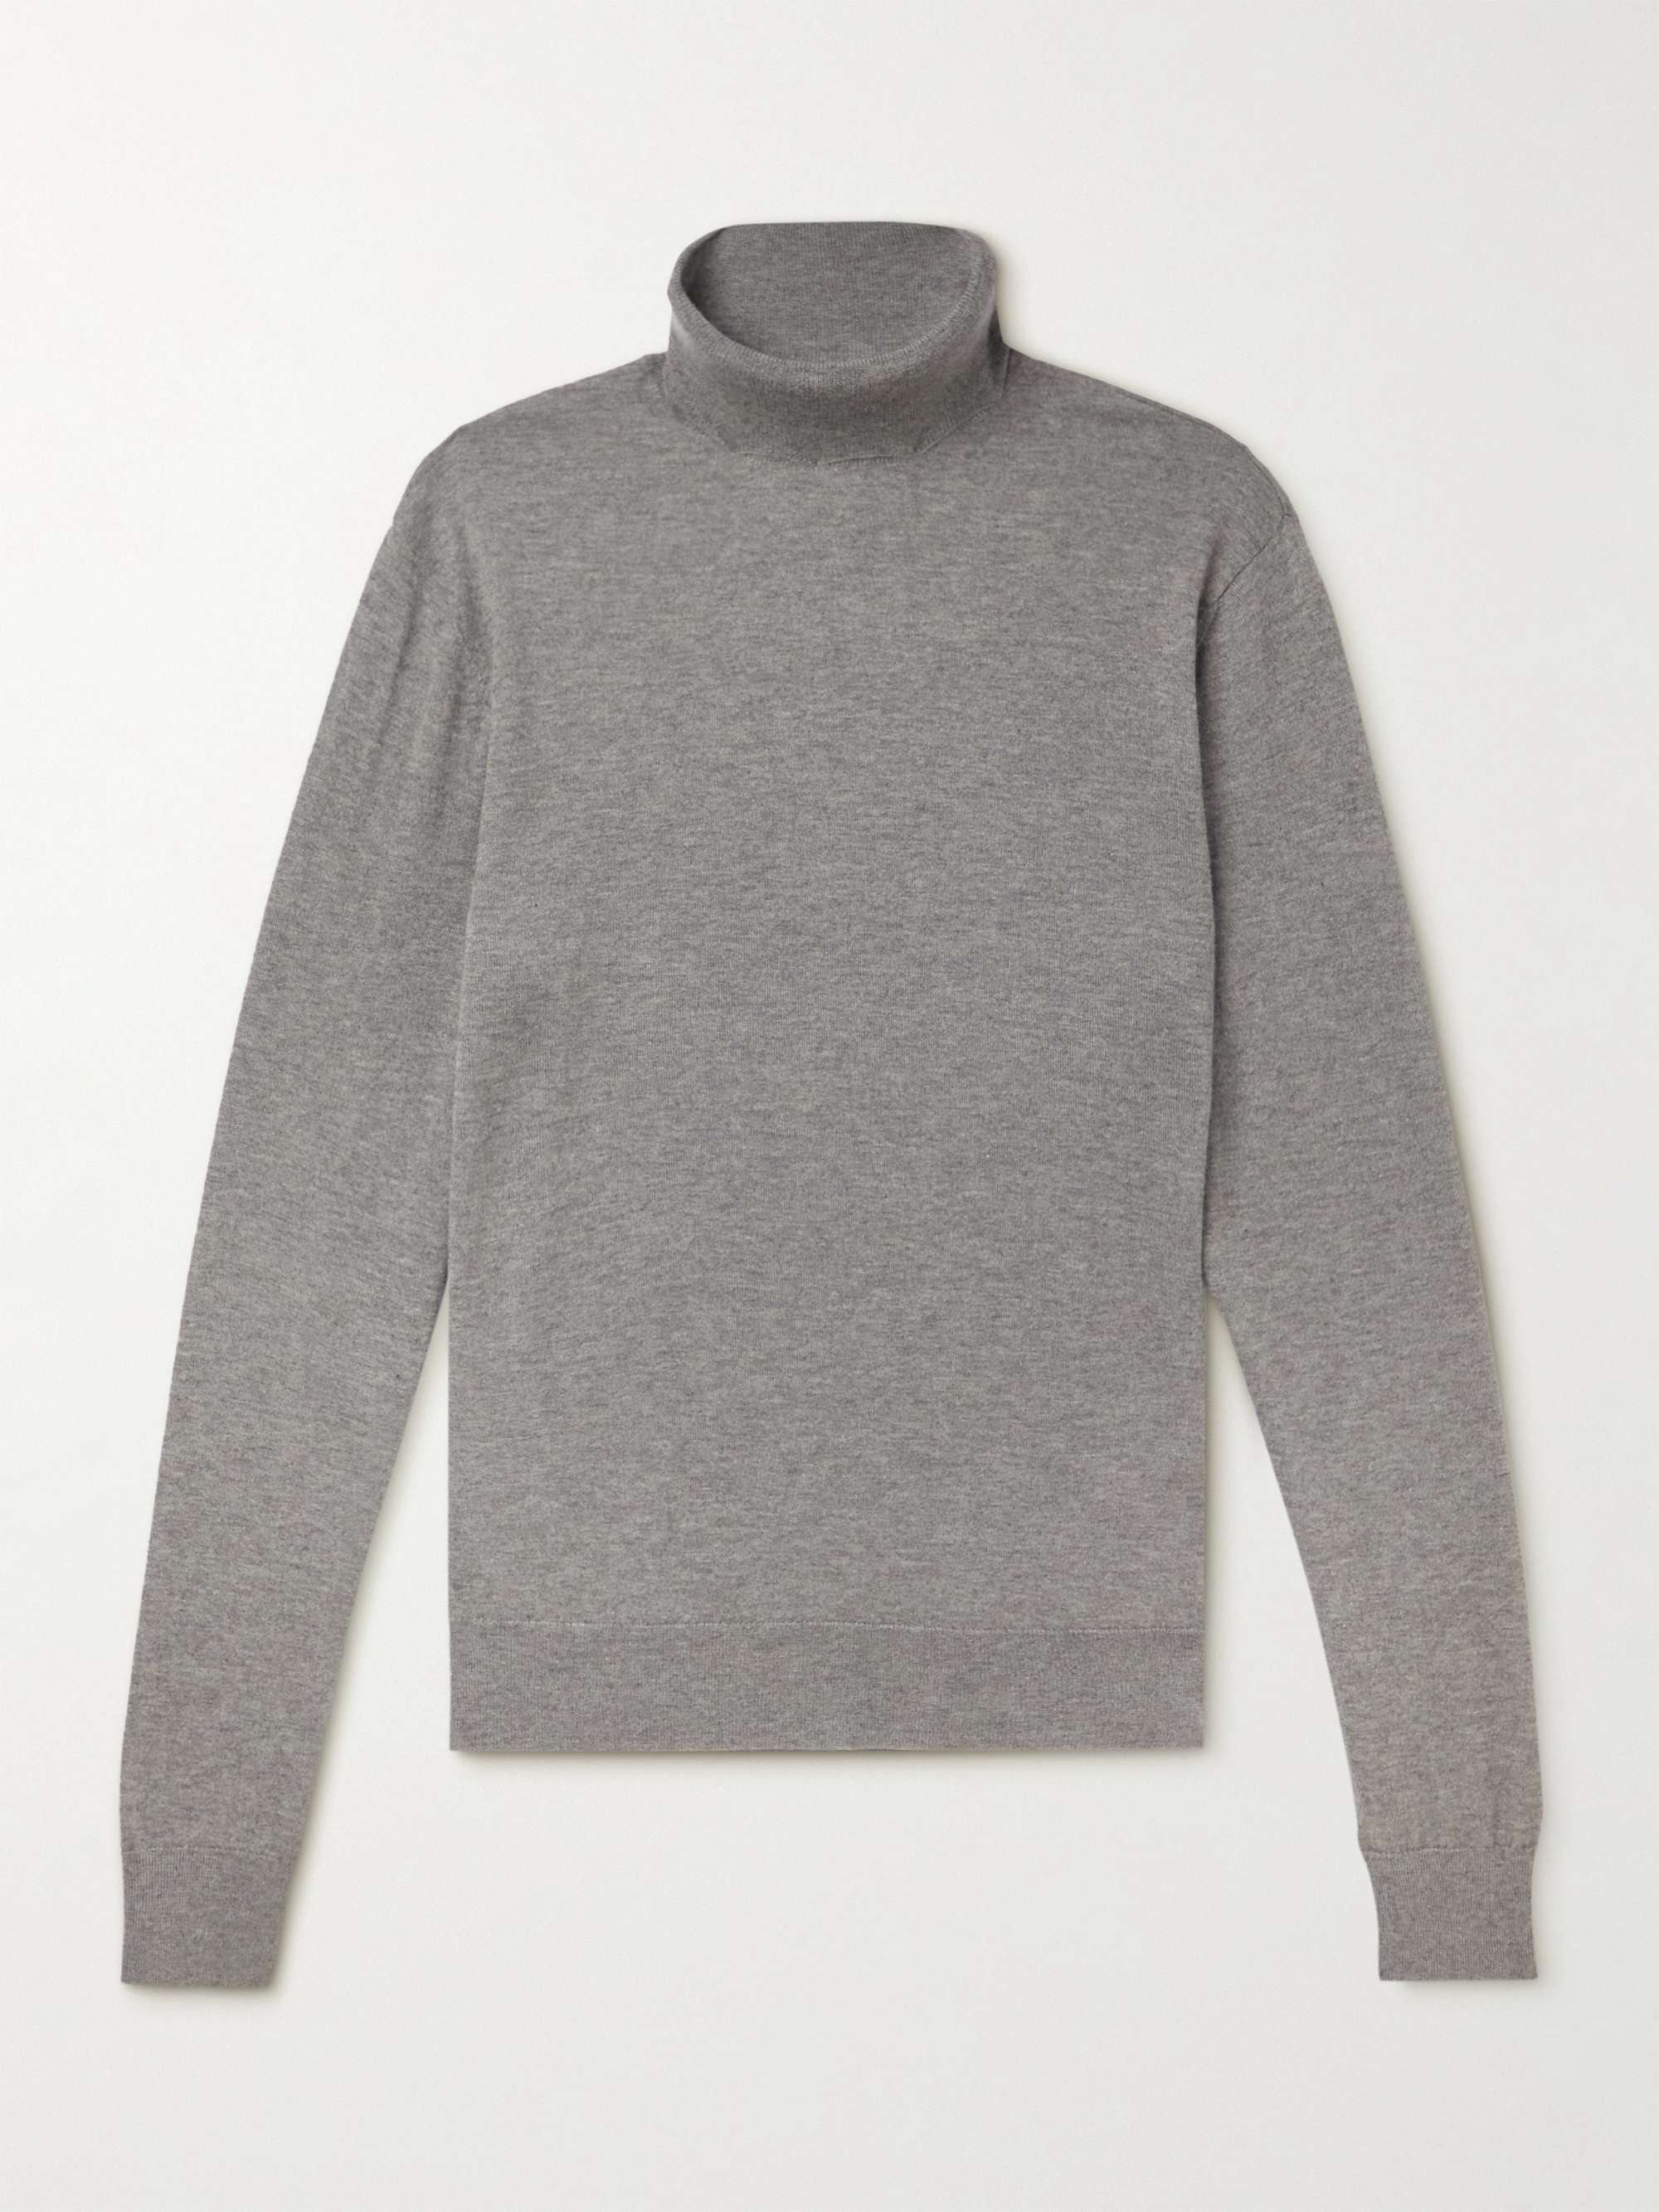 RALPH LAUREN PURPLE LABEL Cashmere Rollneck Sweater for Men | MR PORTER